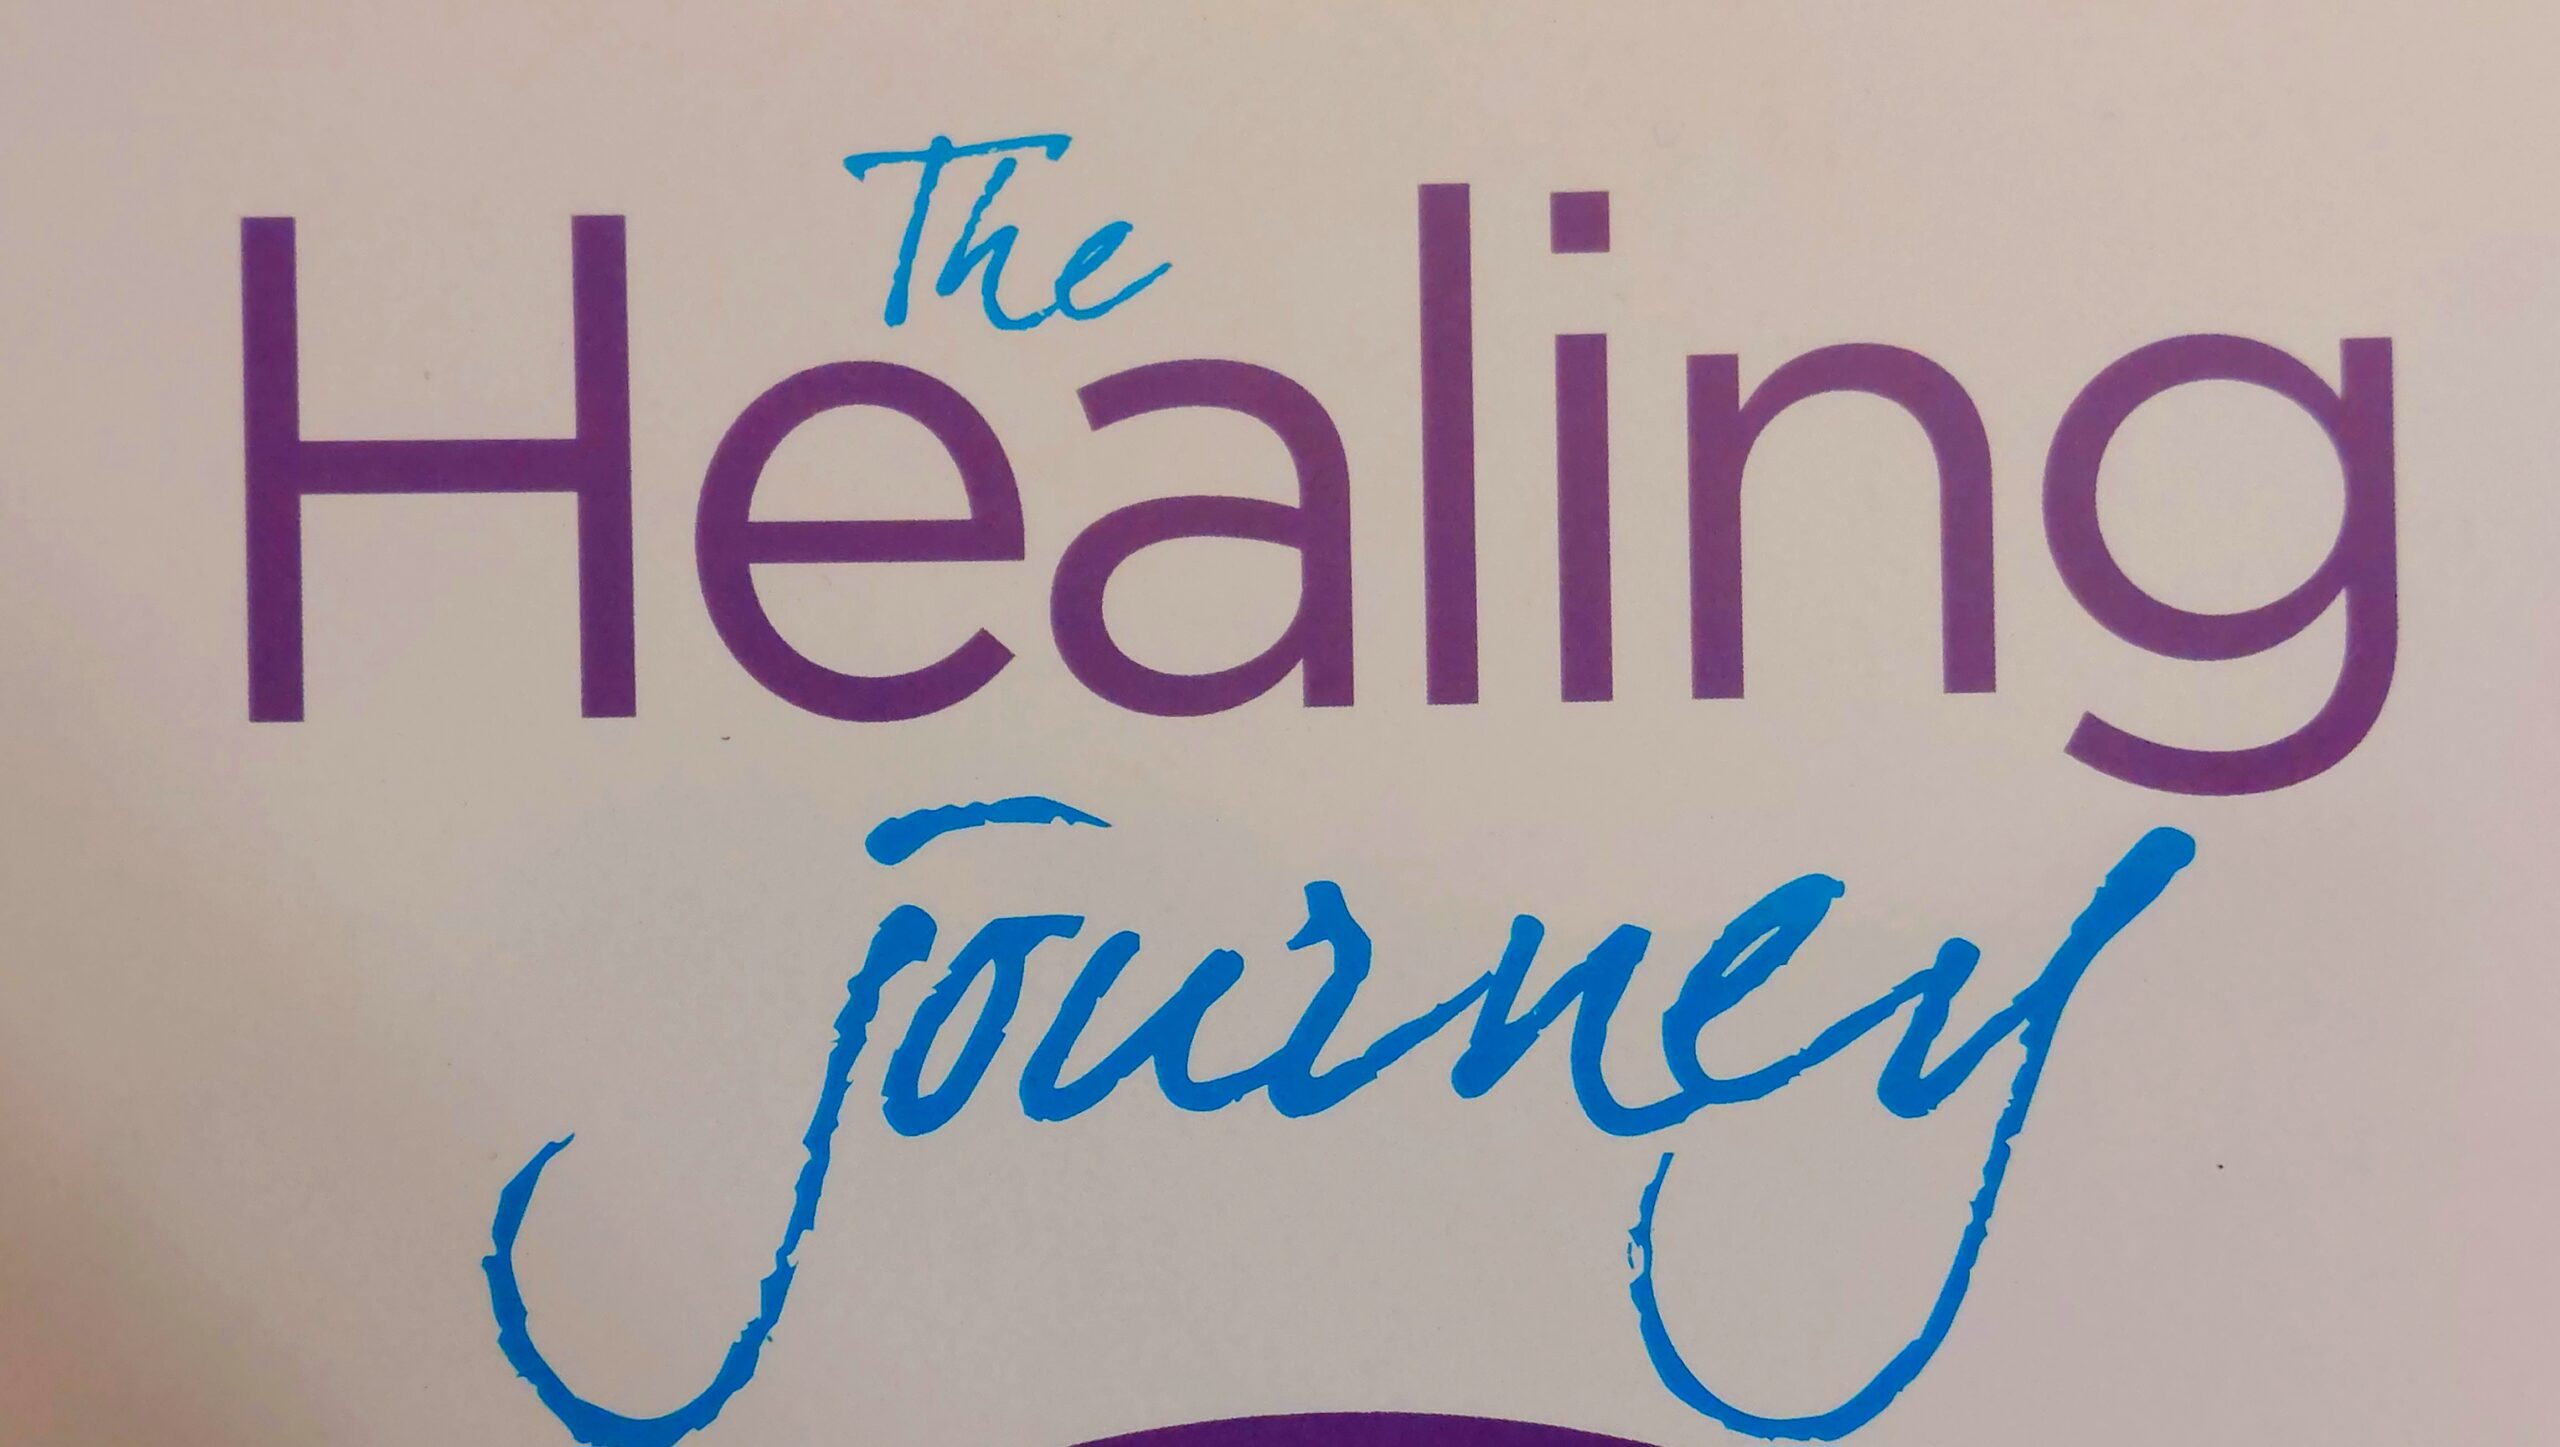 The Healing Journey